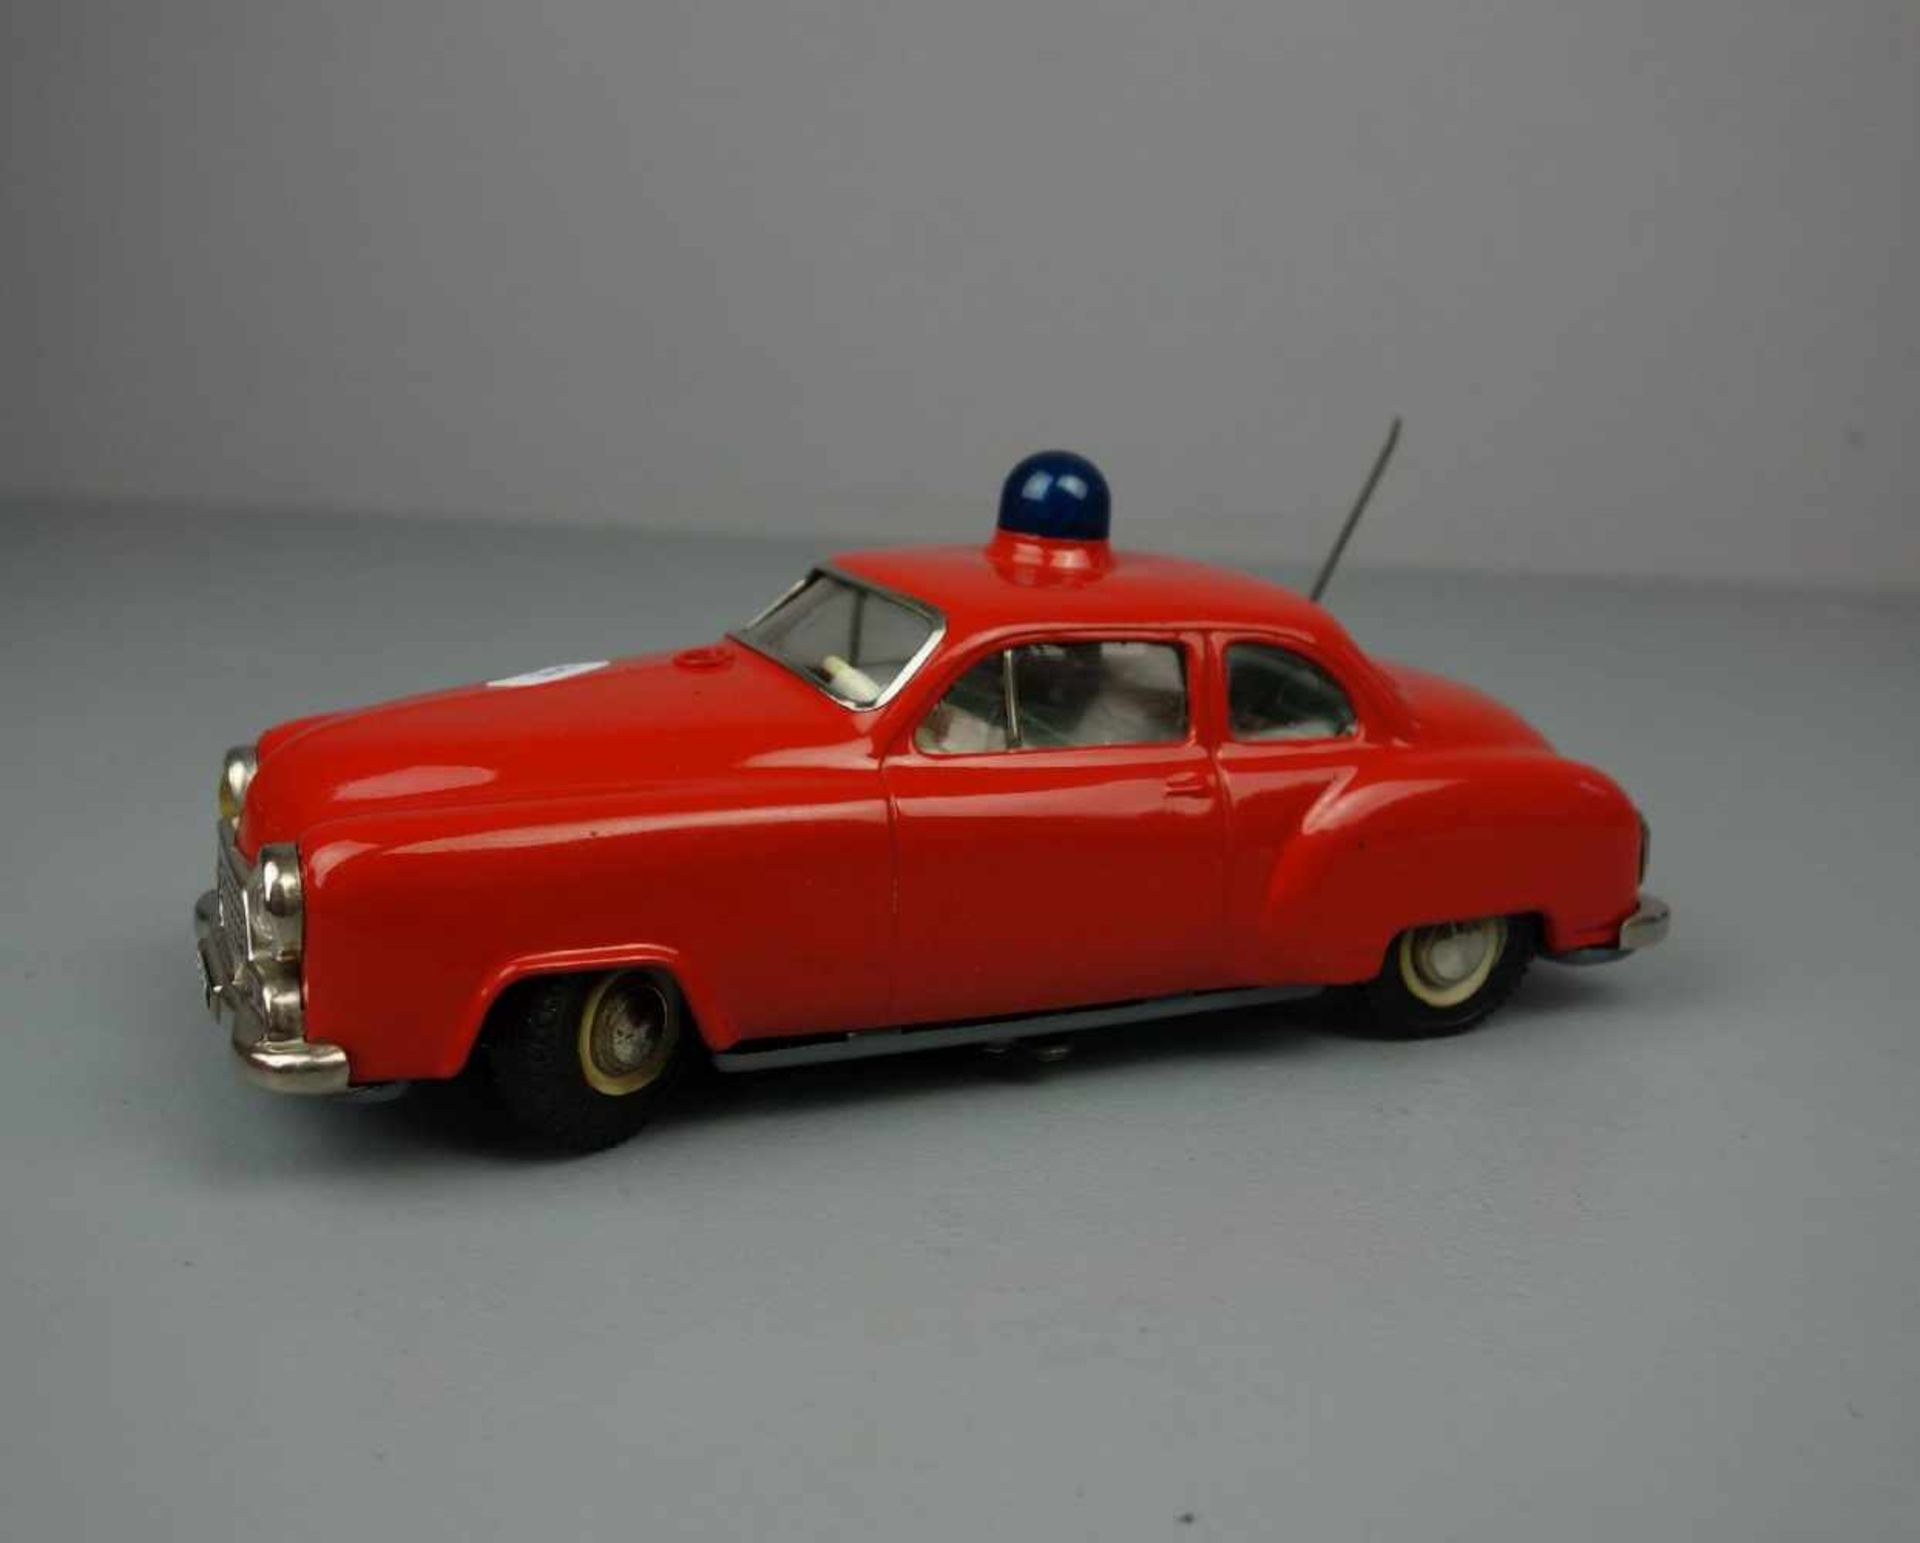 BLECHSPIELZEUG / FAHRZEUG: Polizeiauto / Alarm-Car 5340 / tin toy police car, Manufaktur Schuco -